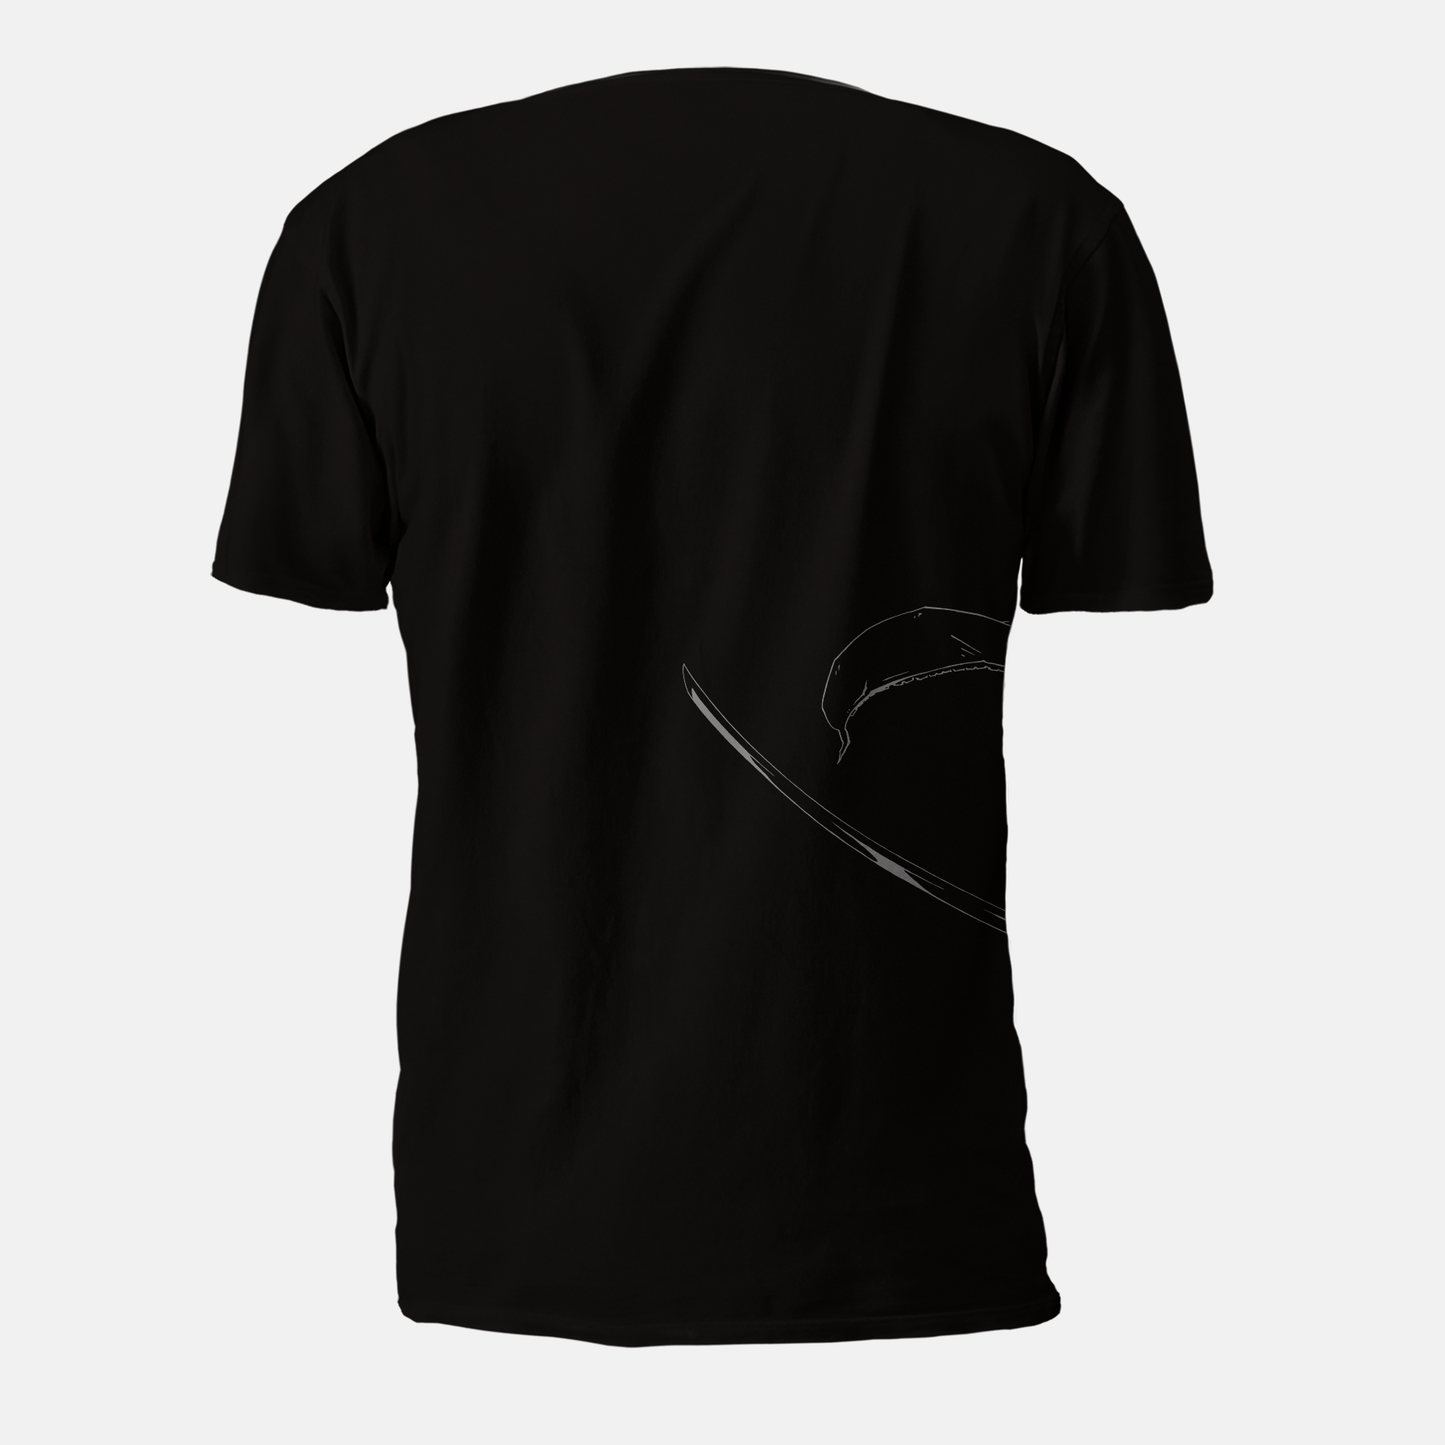 Rider T-shirt: Black